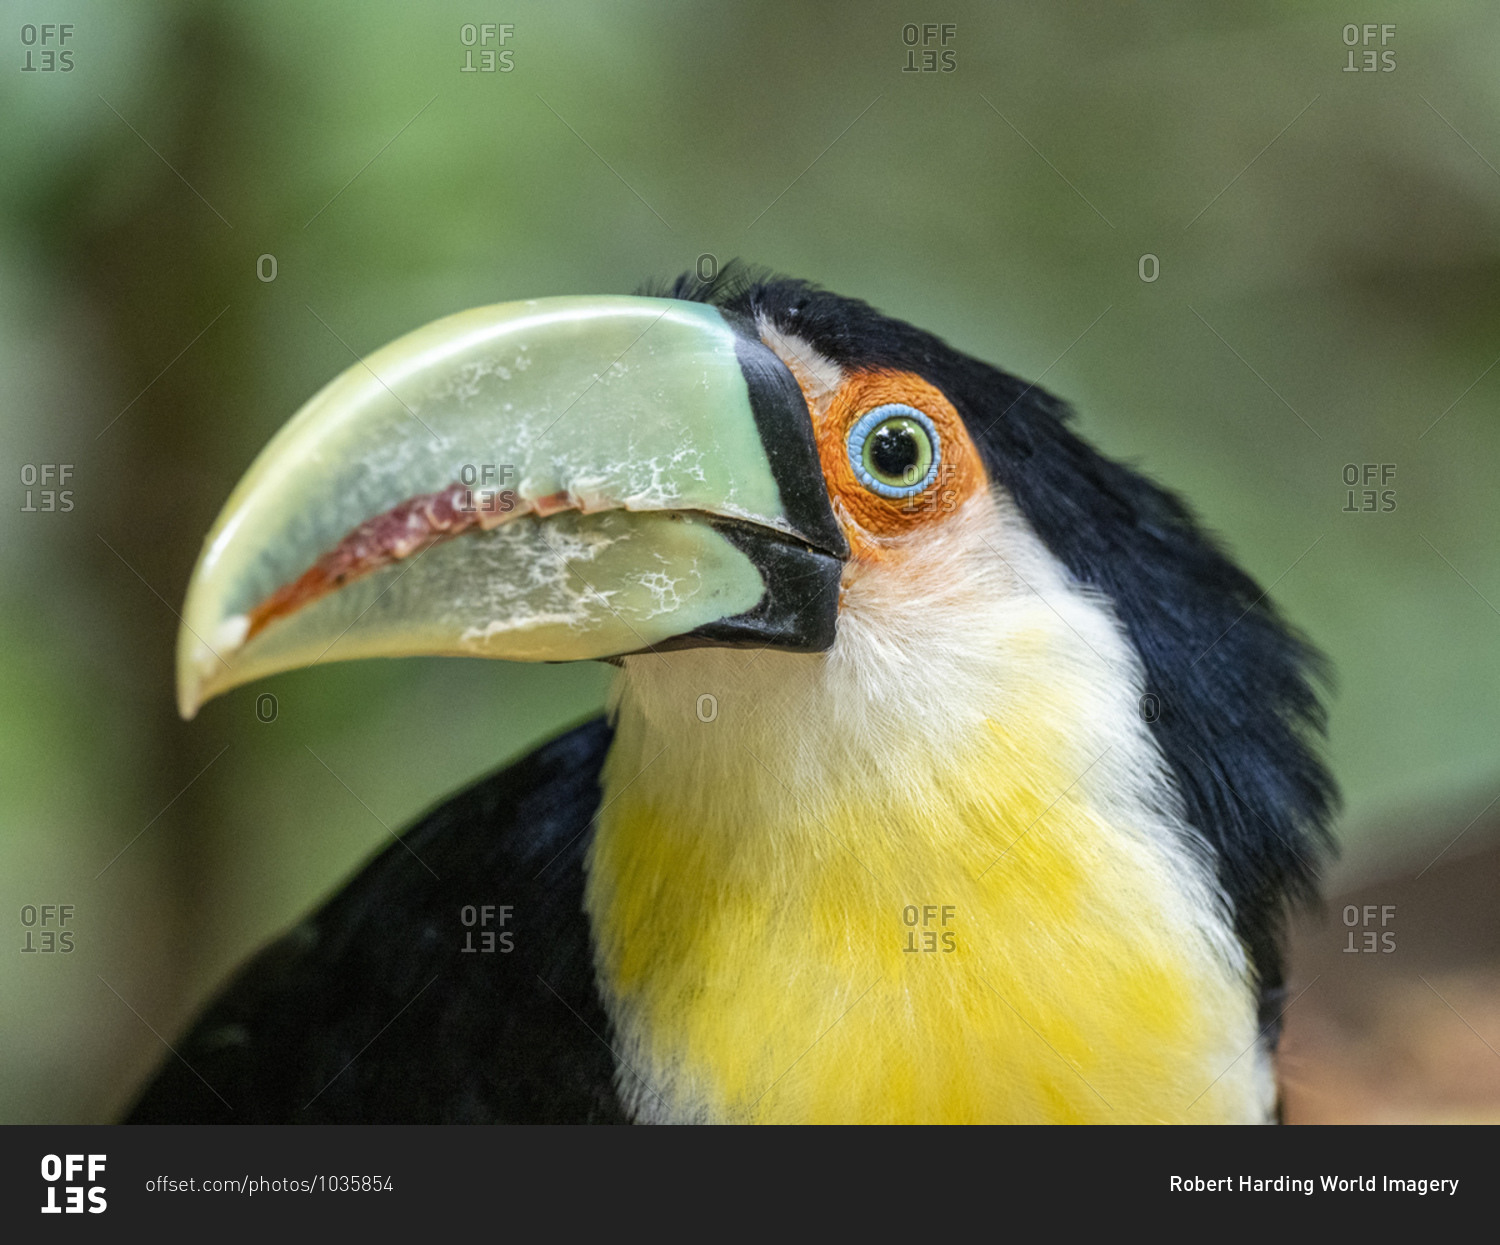 Captive red-breasted toucan (Ramphastos dicolorus), Parque das Aves, Foz do Iguacu, Parana State, Brazil, South America